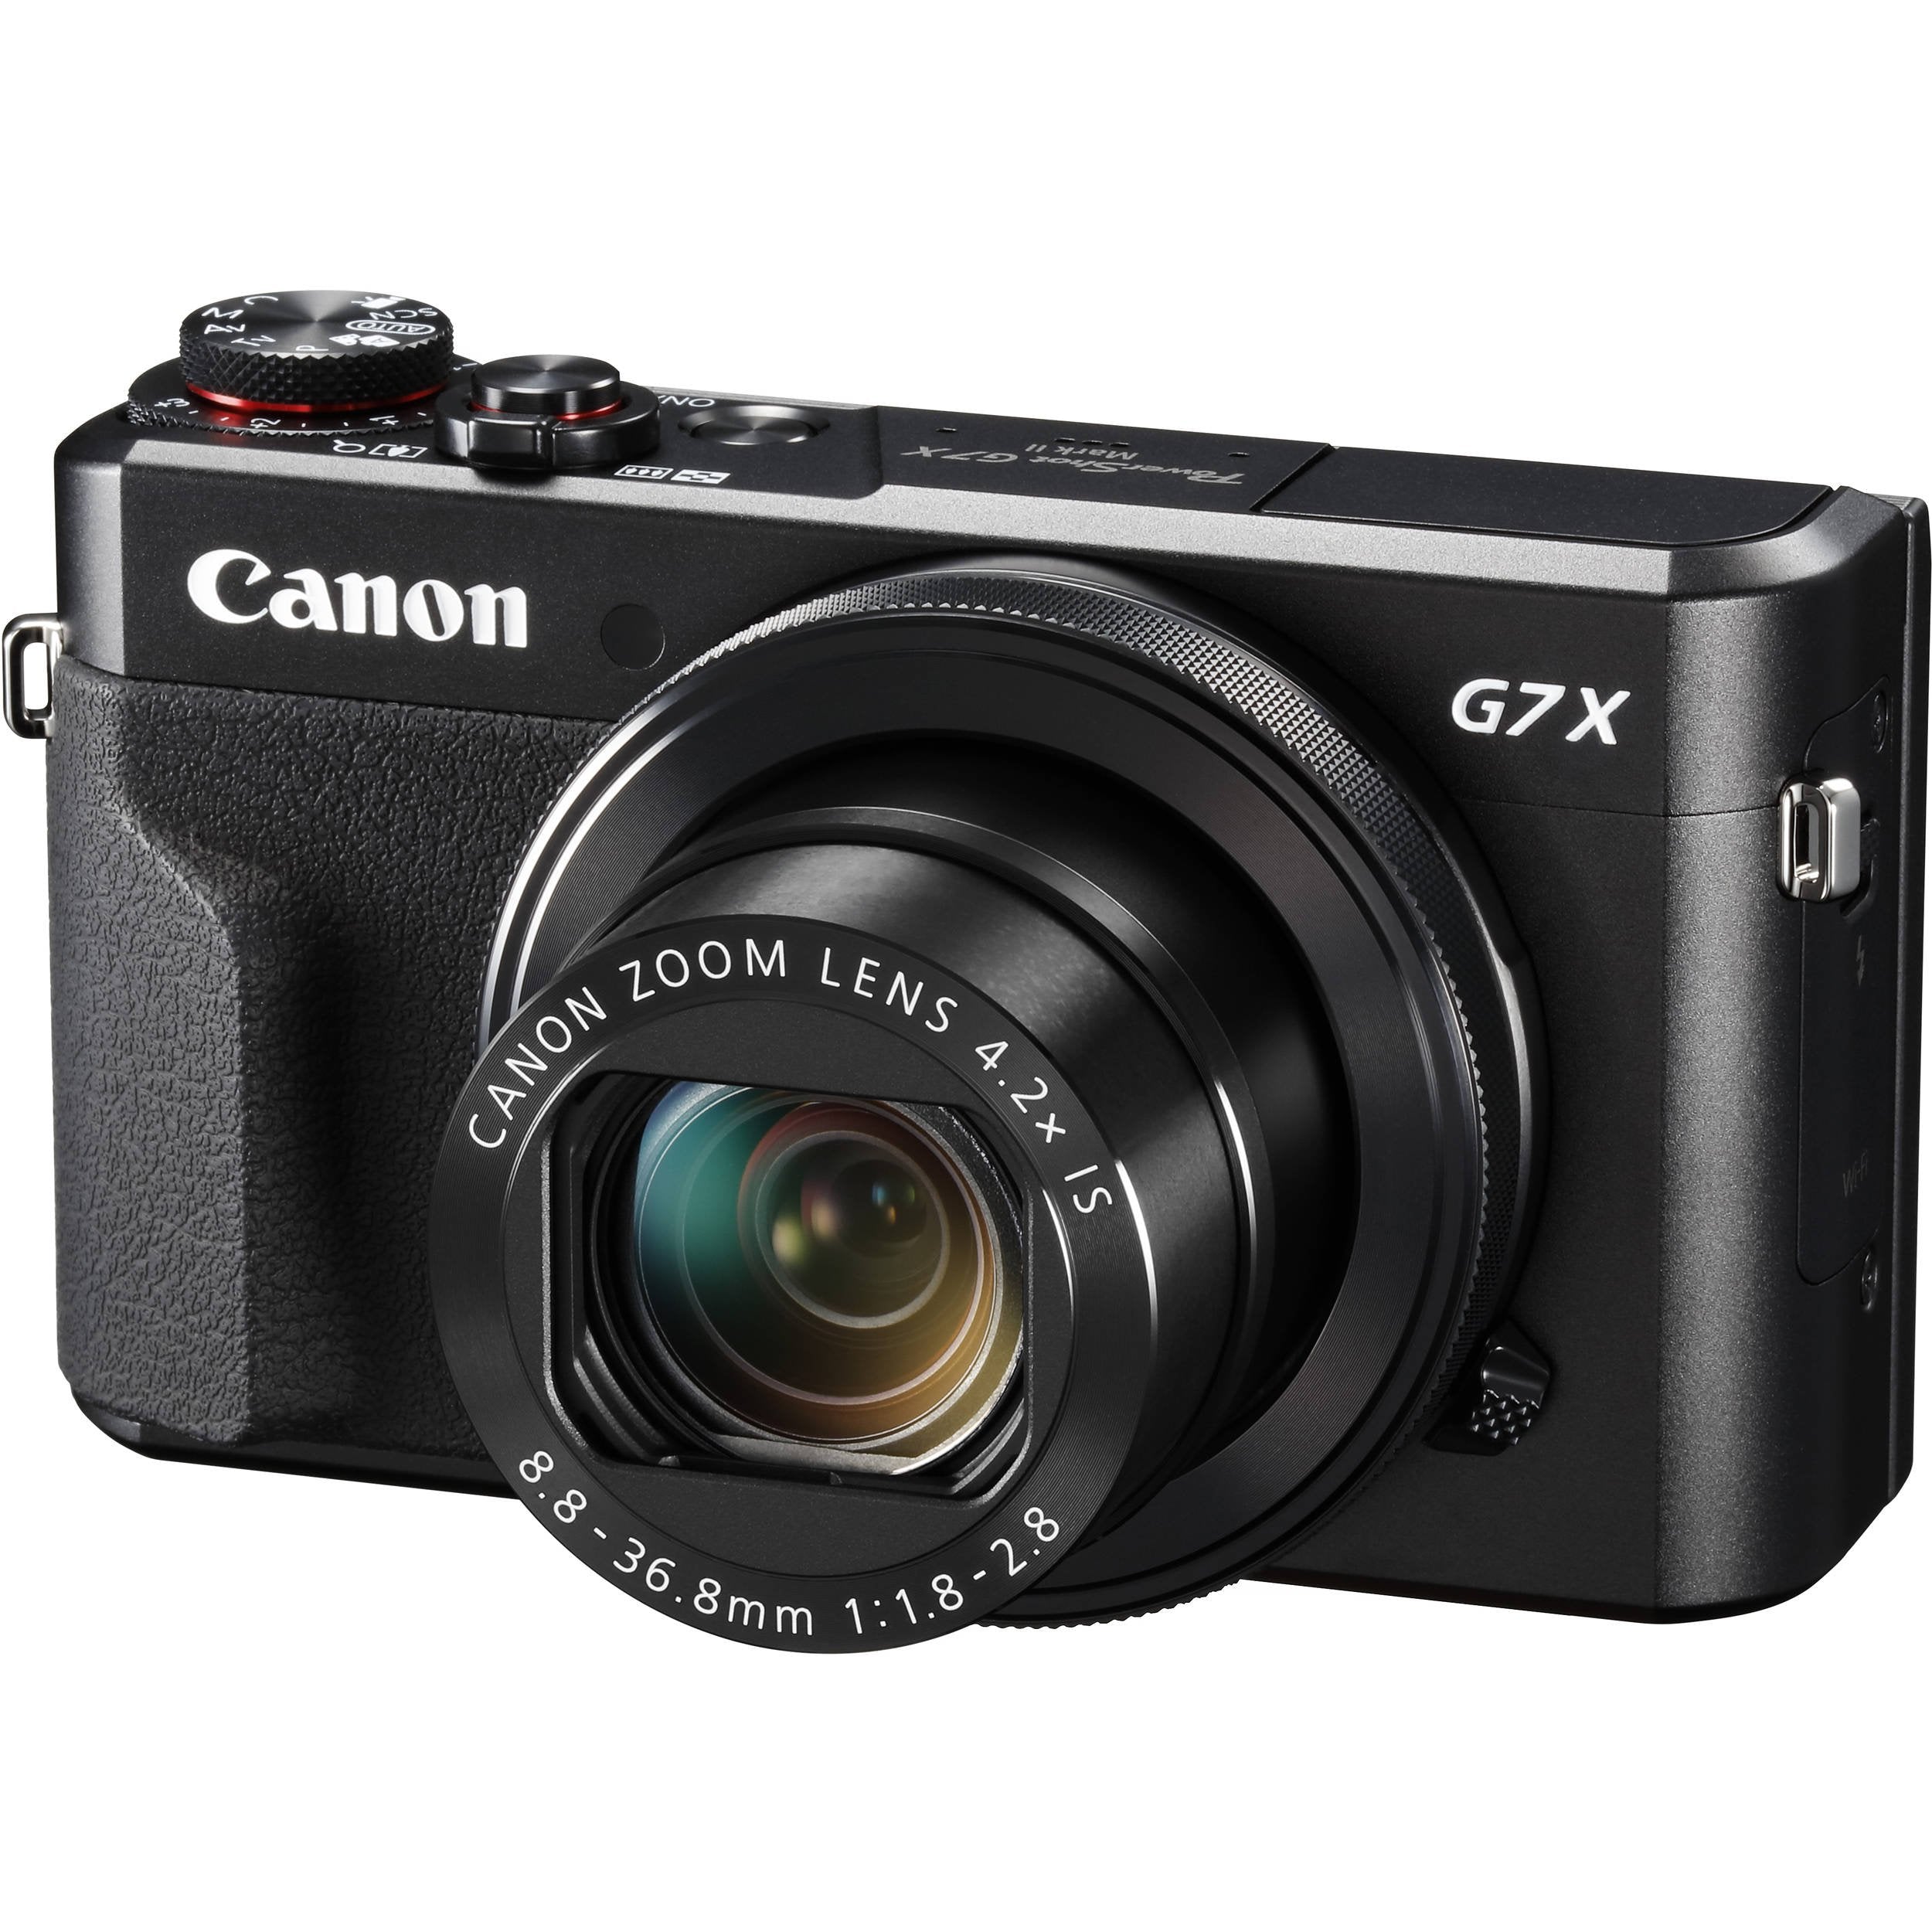 Canon PowerShot G7 X Mark II Digital Camera 1066C001 (International Model) Bundle with 32GB Memory Card + Flexible Tripod